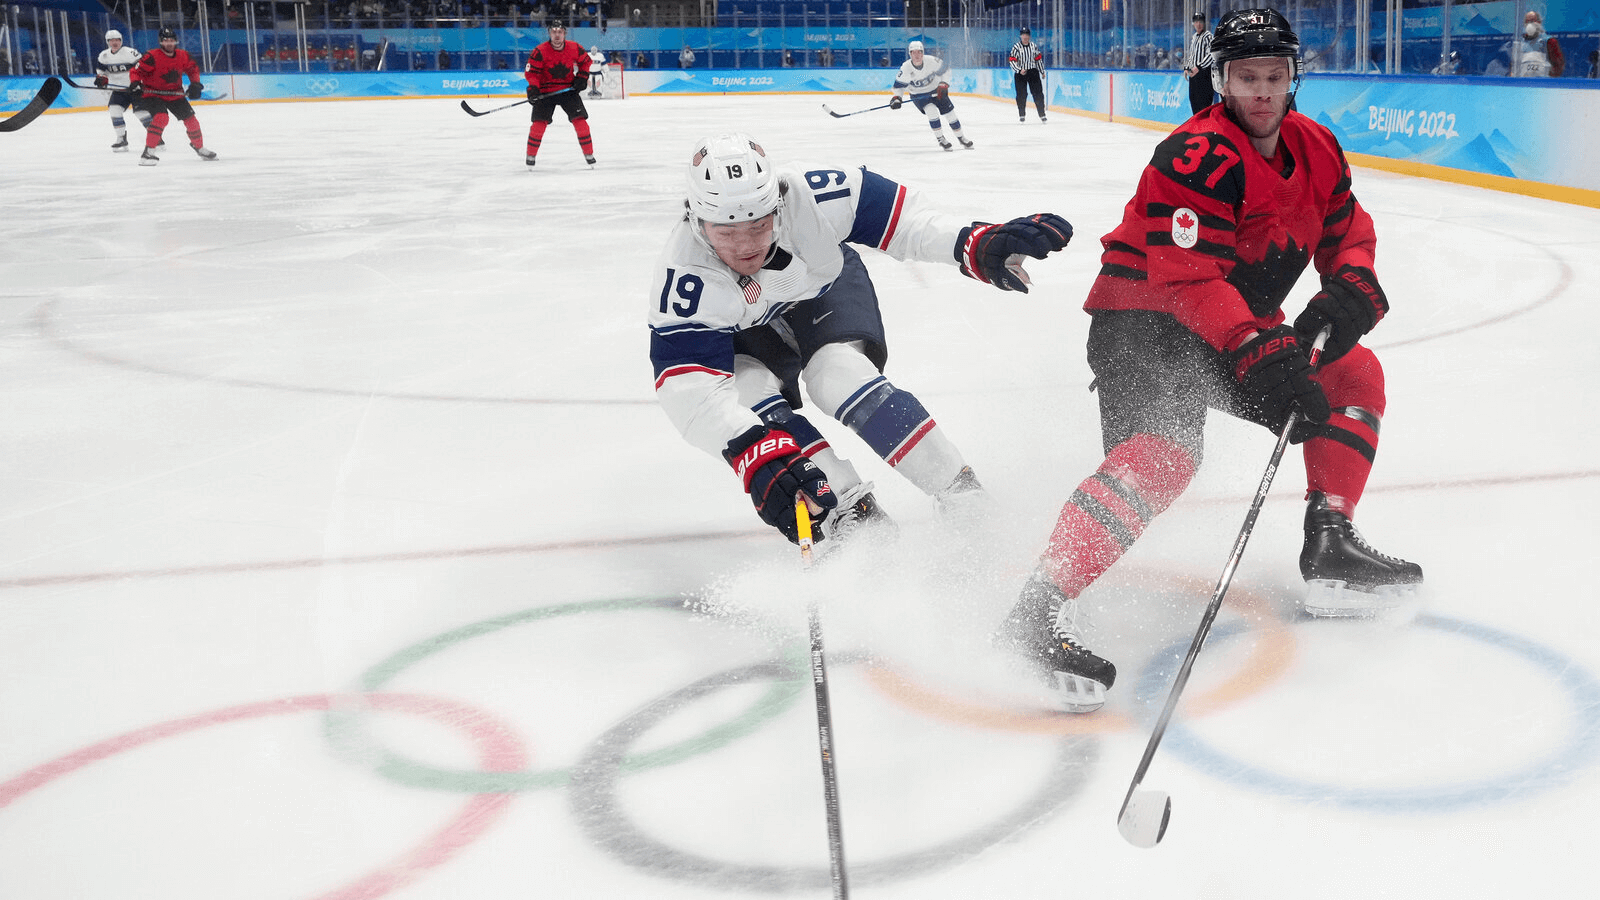 USA and Canada Ice hockey players skating towarrds the puk